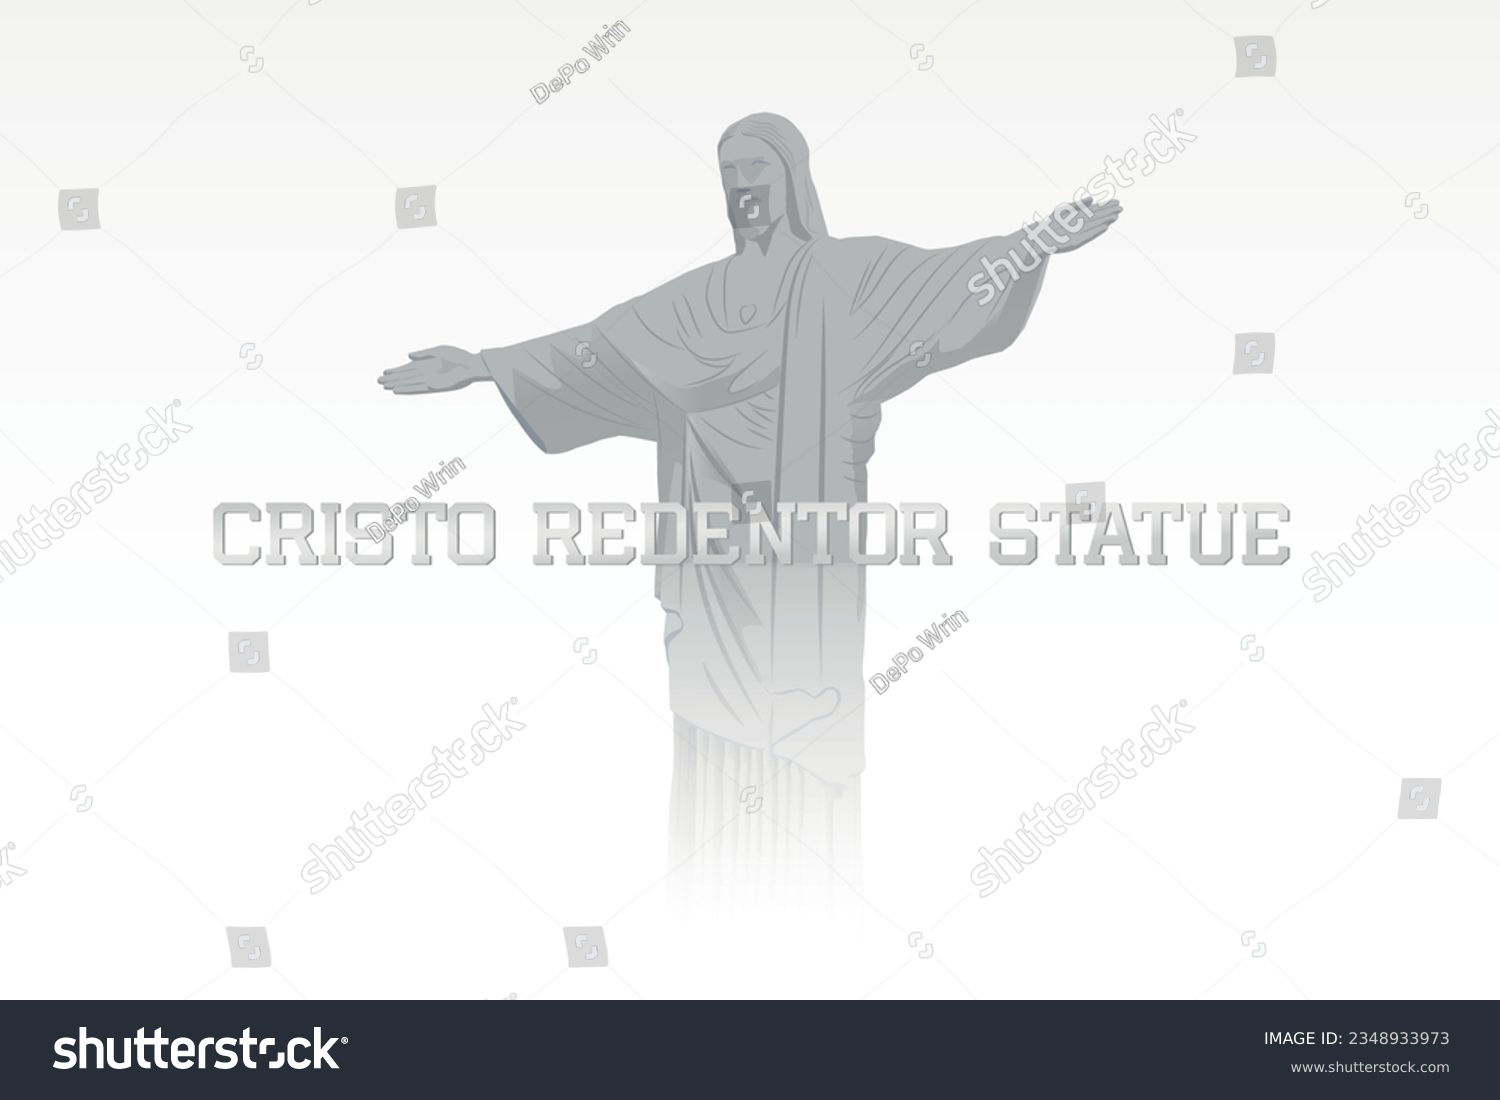 SVG of Christ the Redeemer of Rio de Janeiro, Brazil svg